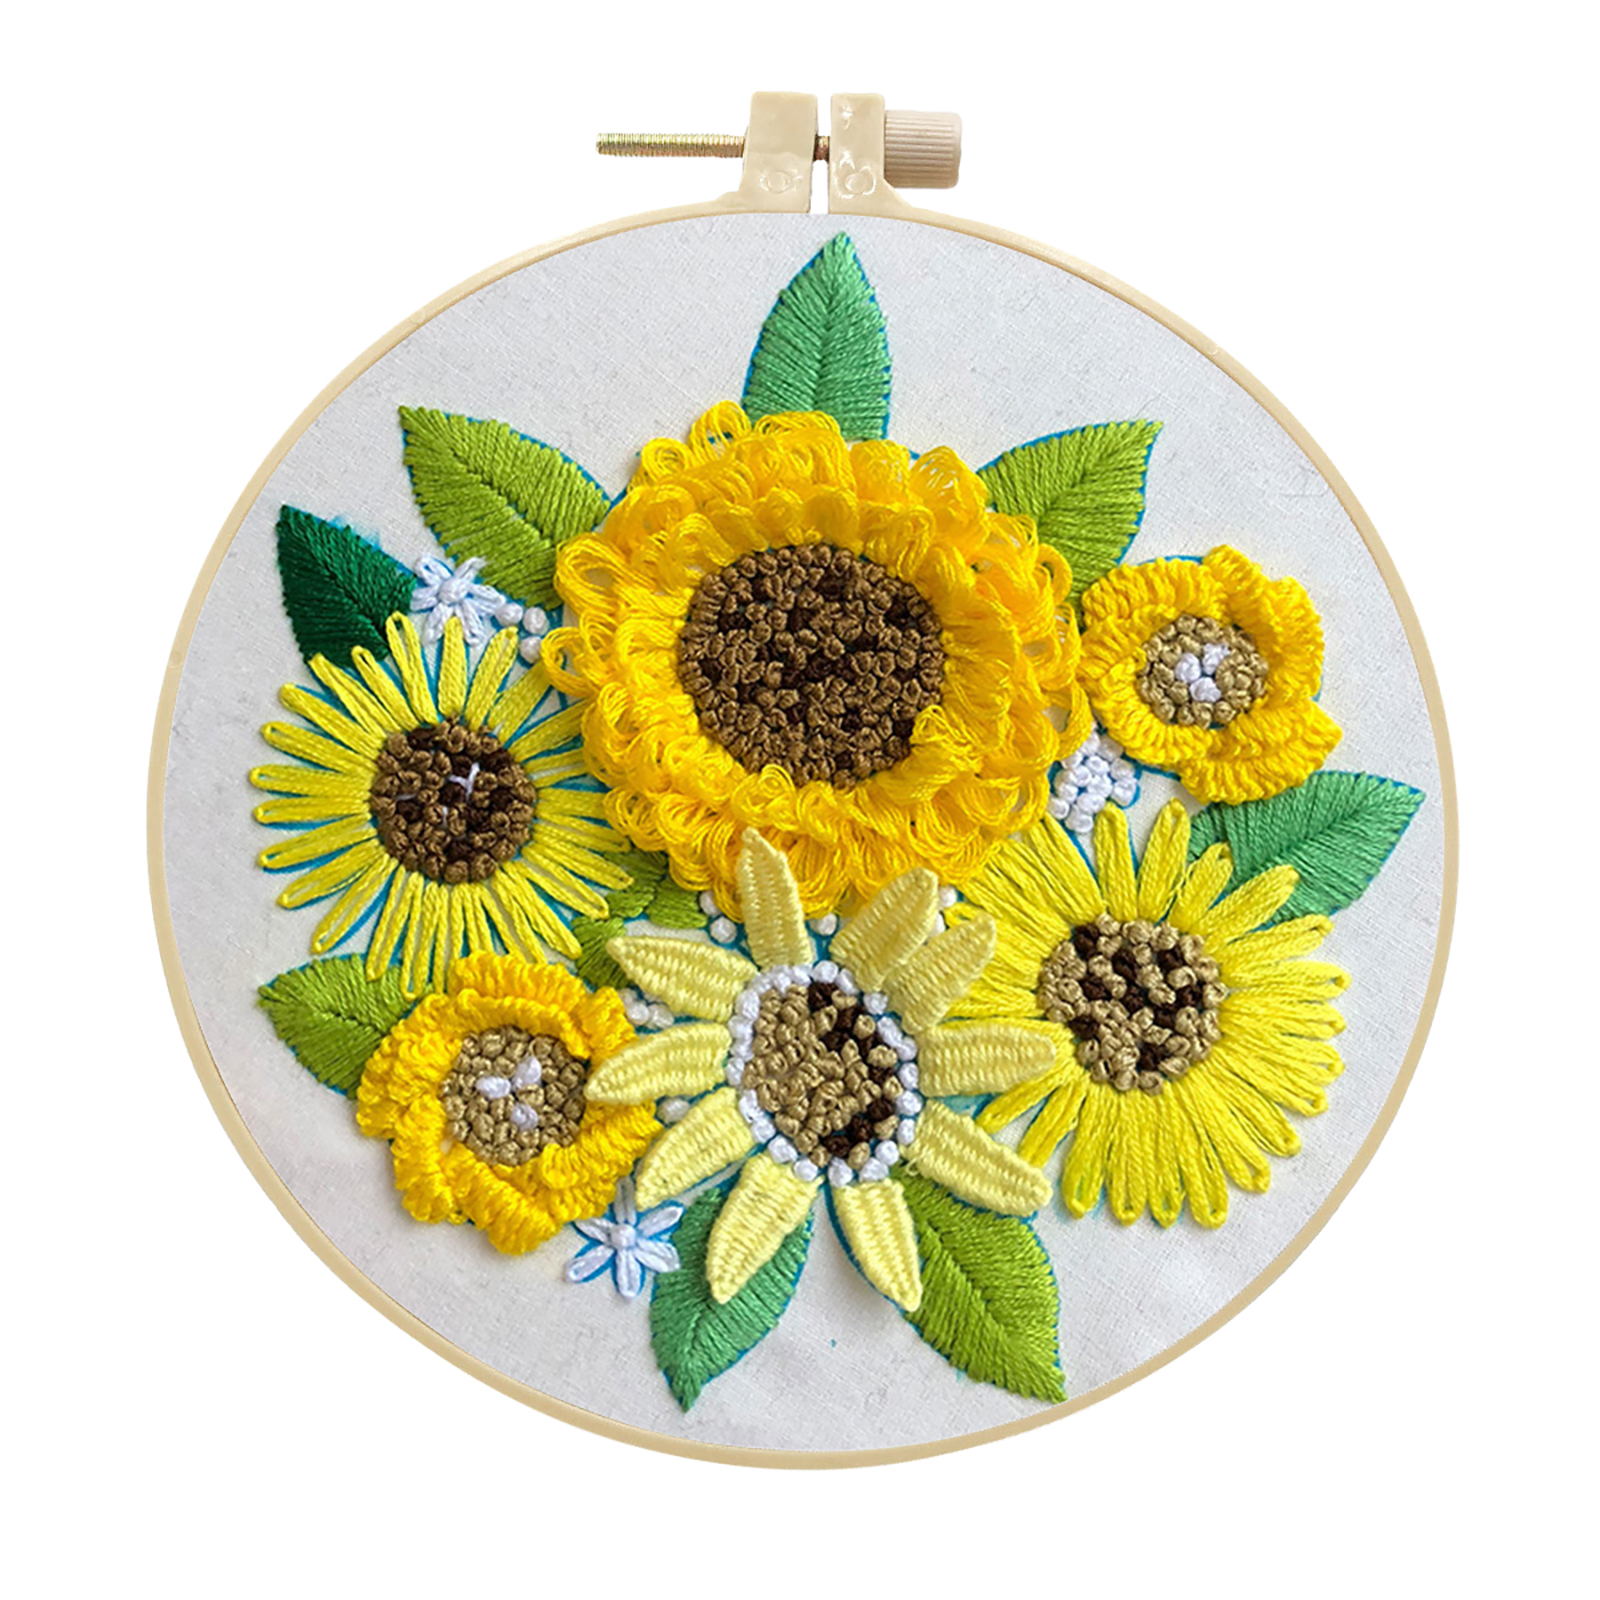 Handmade Embroidery Kit Cross stitch kit for Adult Beginner - Handful of Sunflowers Pattern